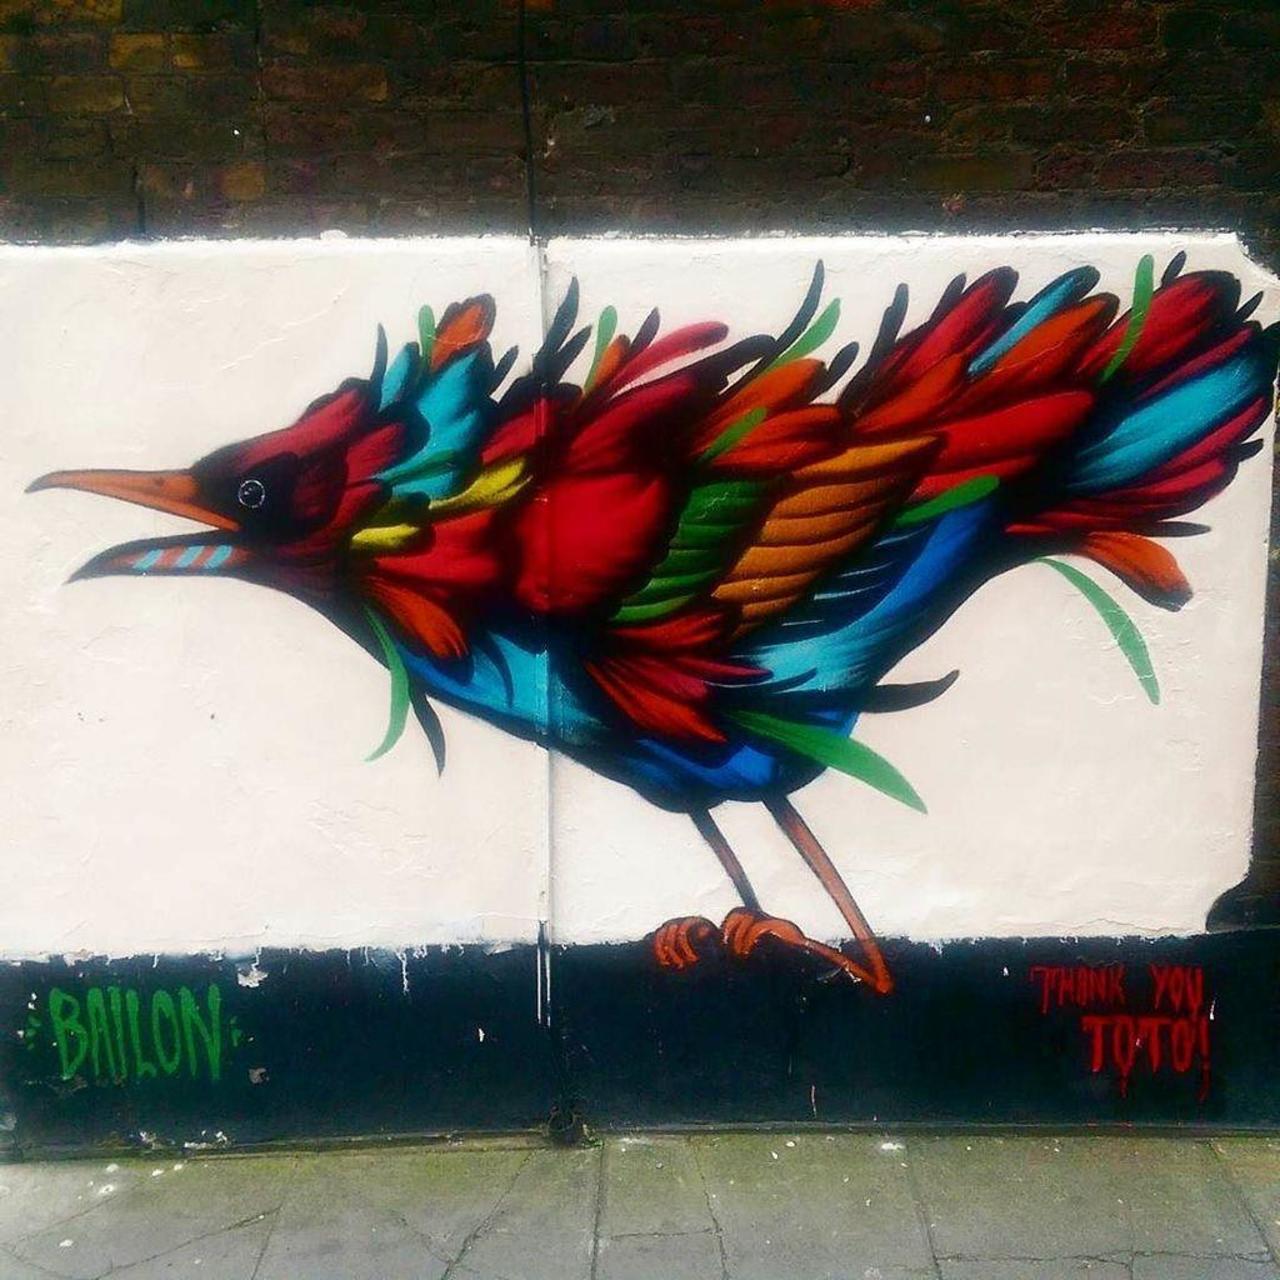 #bailon #mateusbailon #London #graff #graf #graffiti #graffitilife #graffitilondon #graffitiporn #streetart #street… http://t.co/VBSCFSrOGI